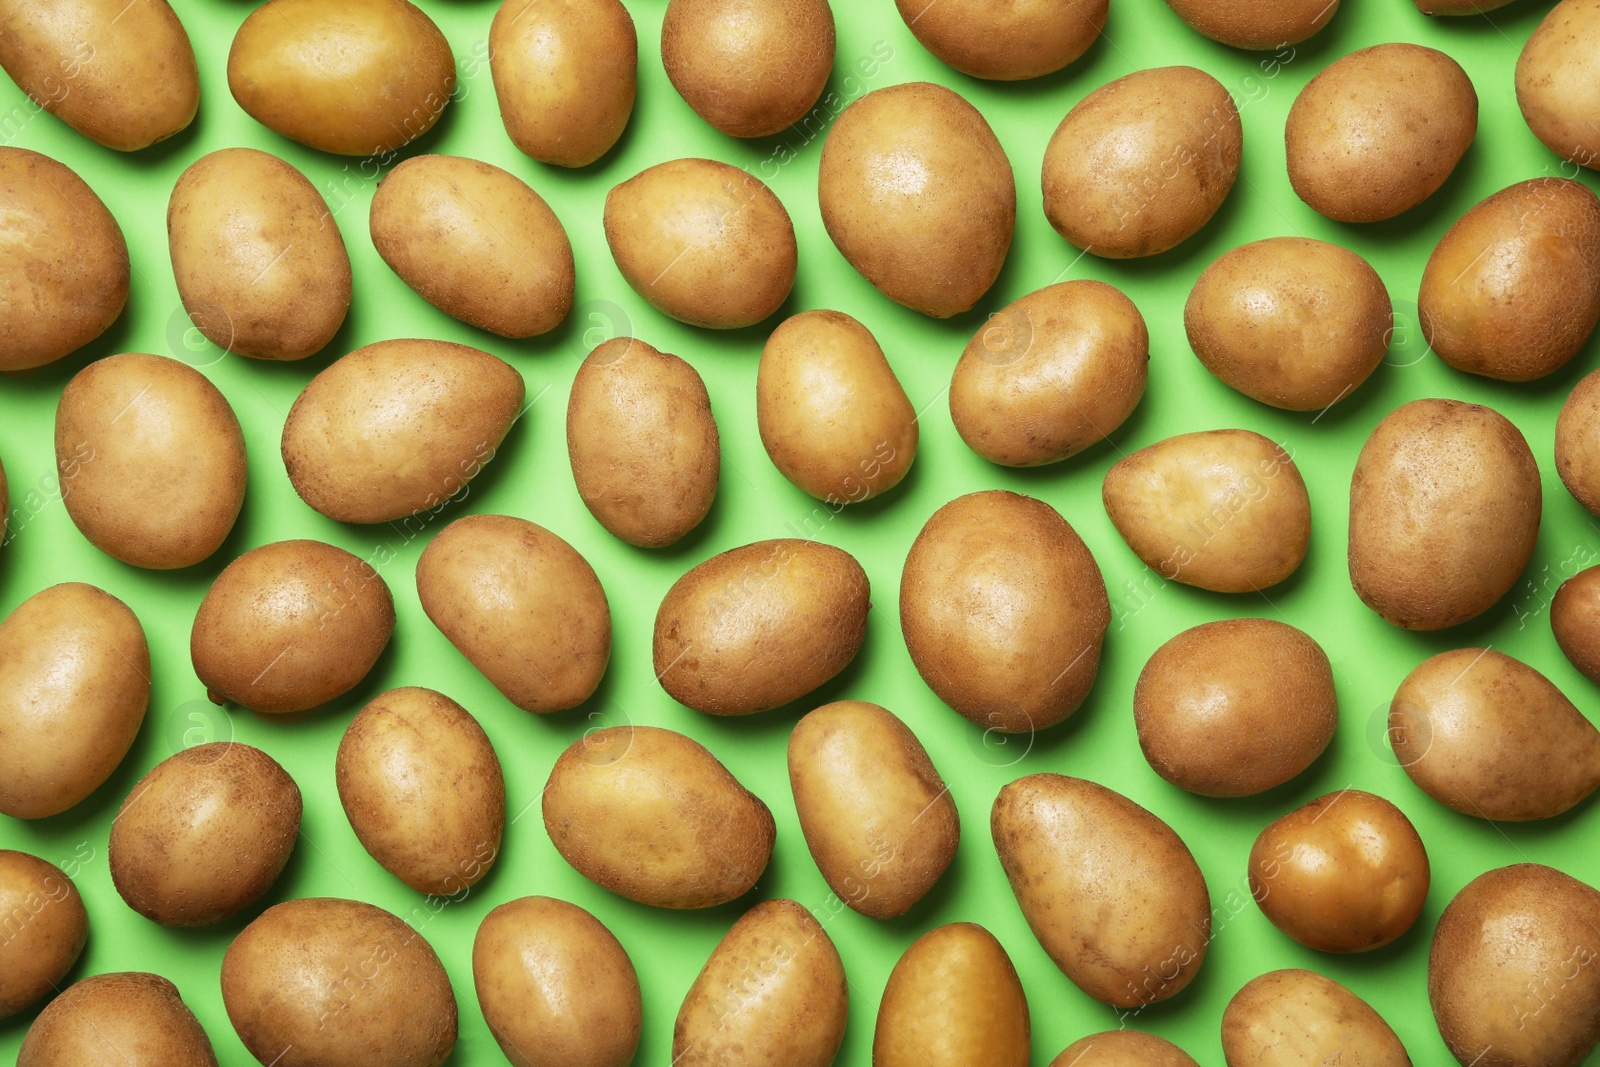 Photo of Raw fresh organic potatoes on green background, flat lay